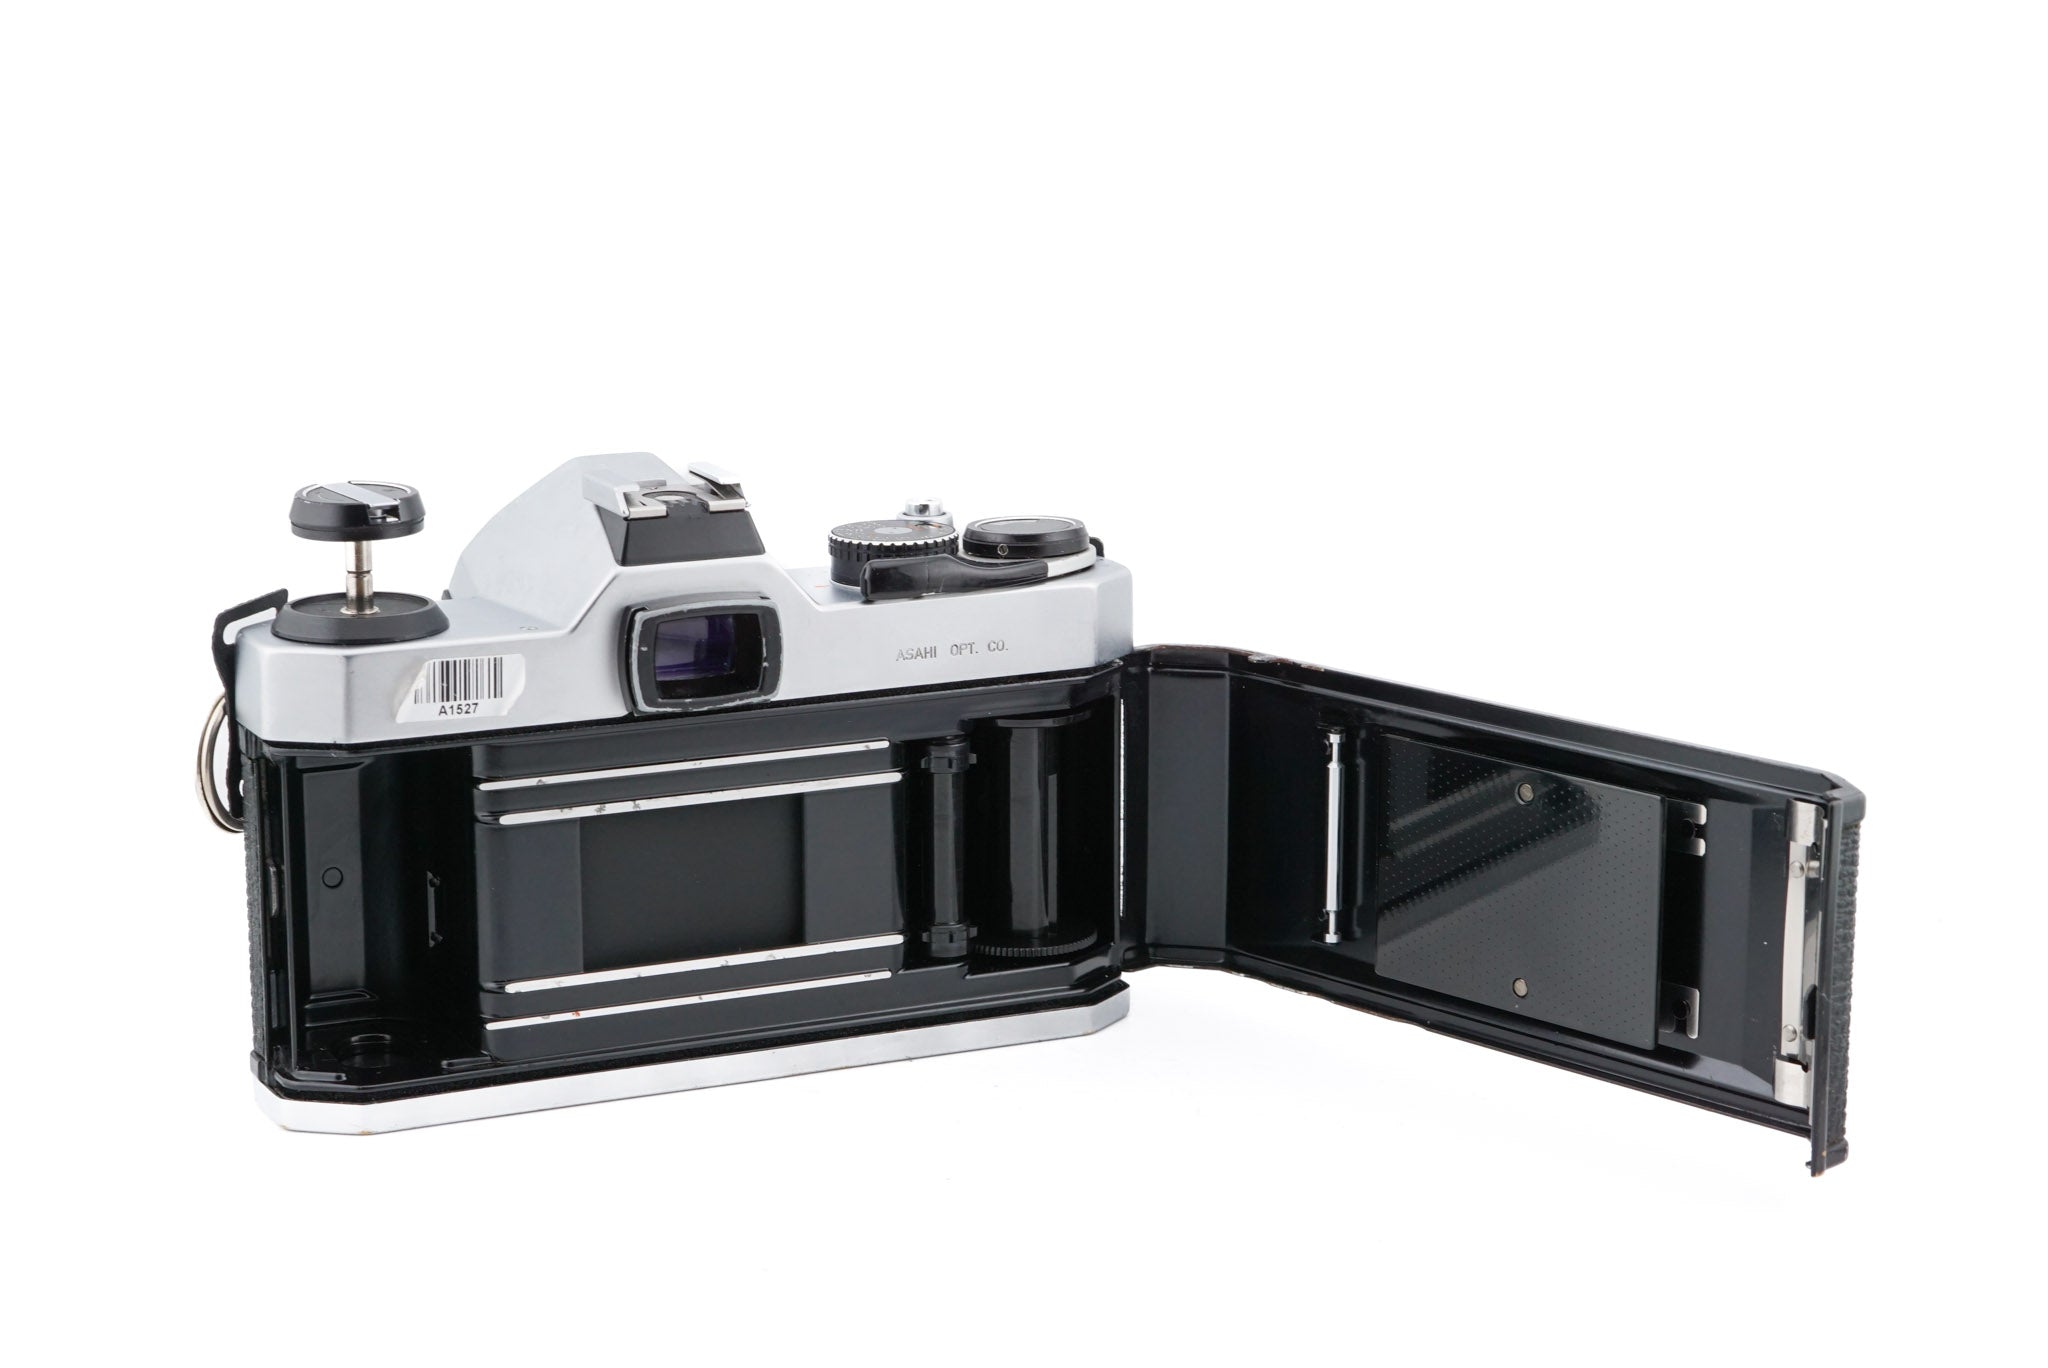 Pentax K1000 - 35mm Film Camera - with 6 month warranty